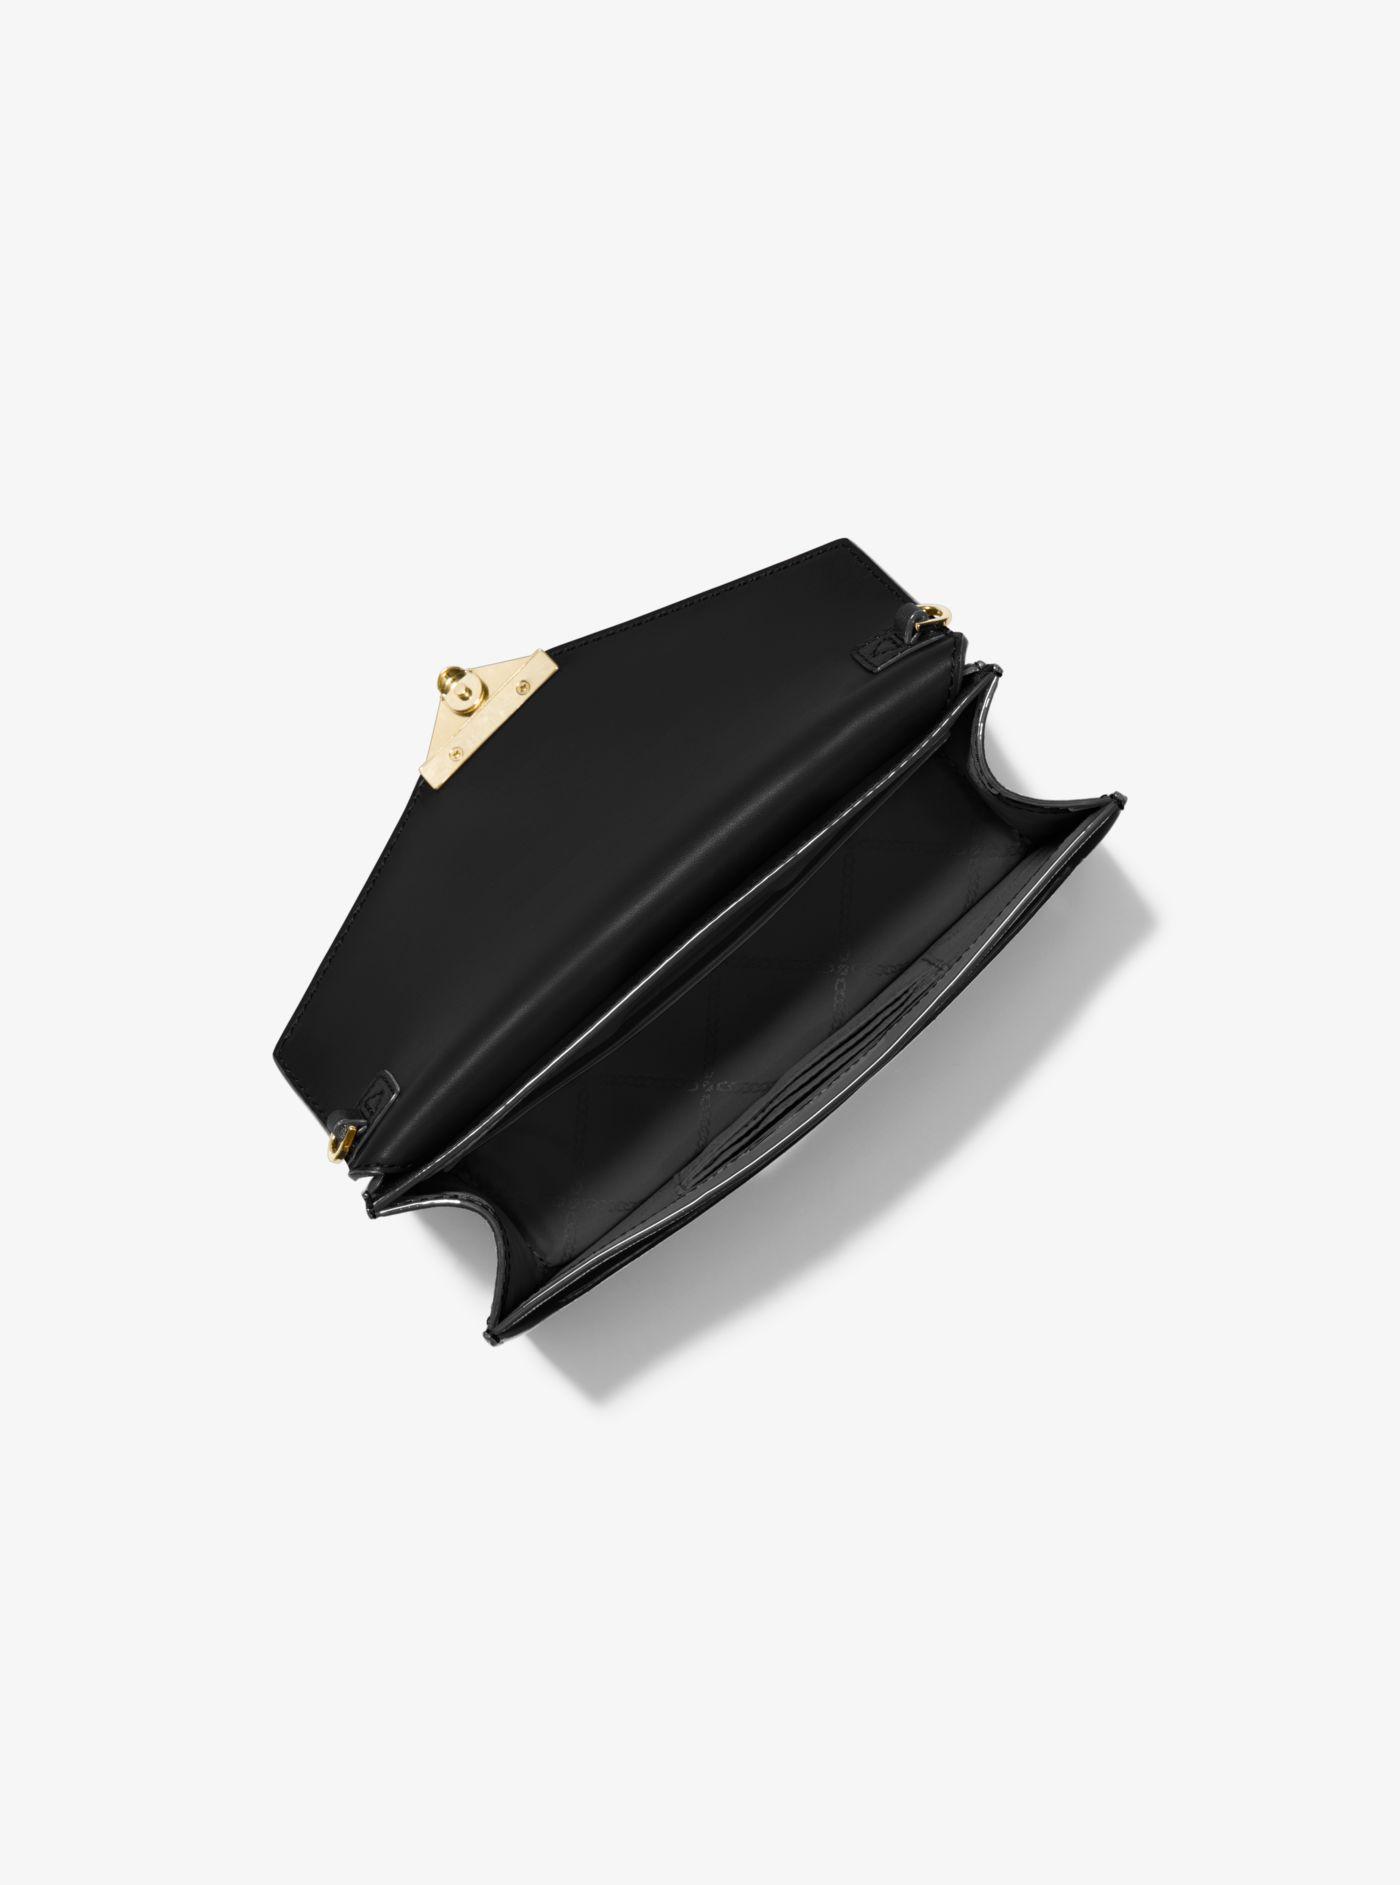 Michael Kors Grace Medium Patent Leather Envelope Clutch in Black - Lyst